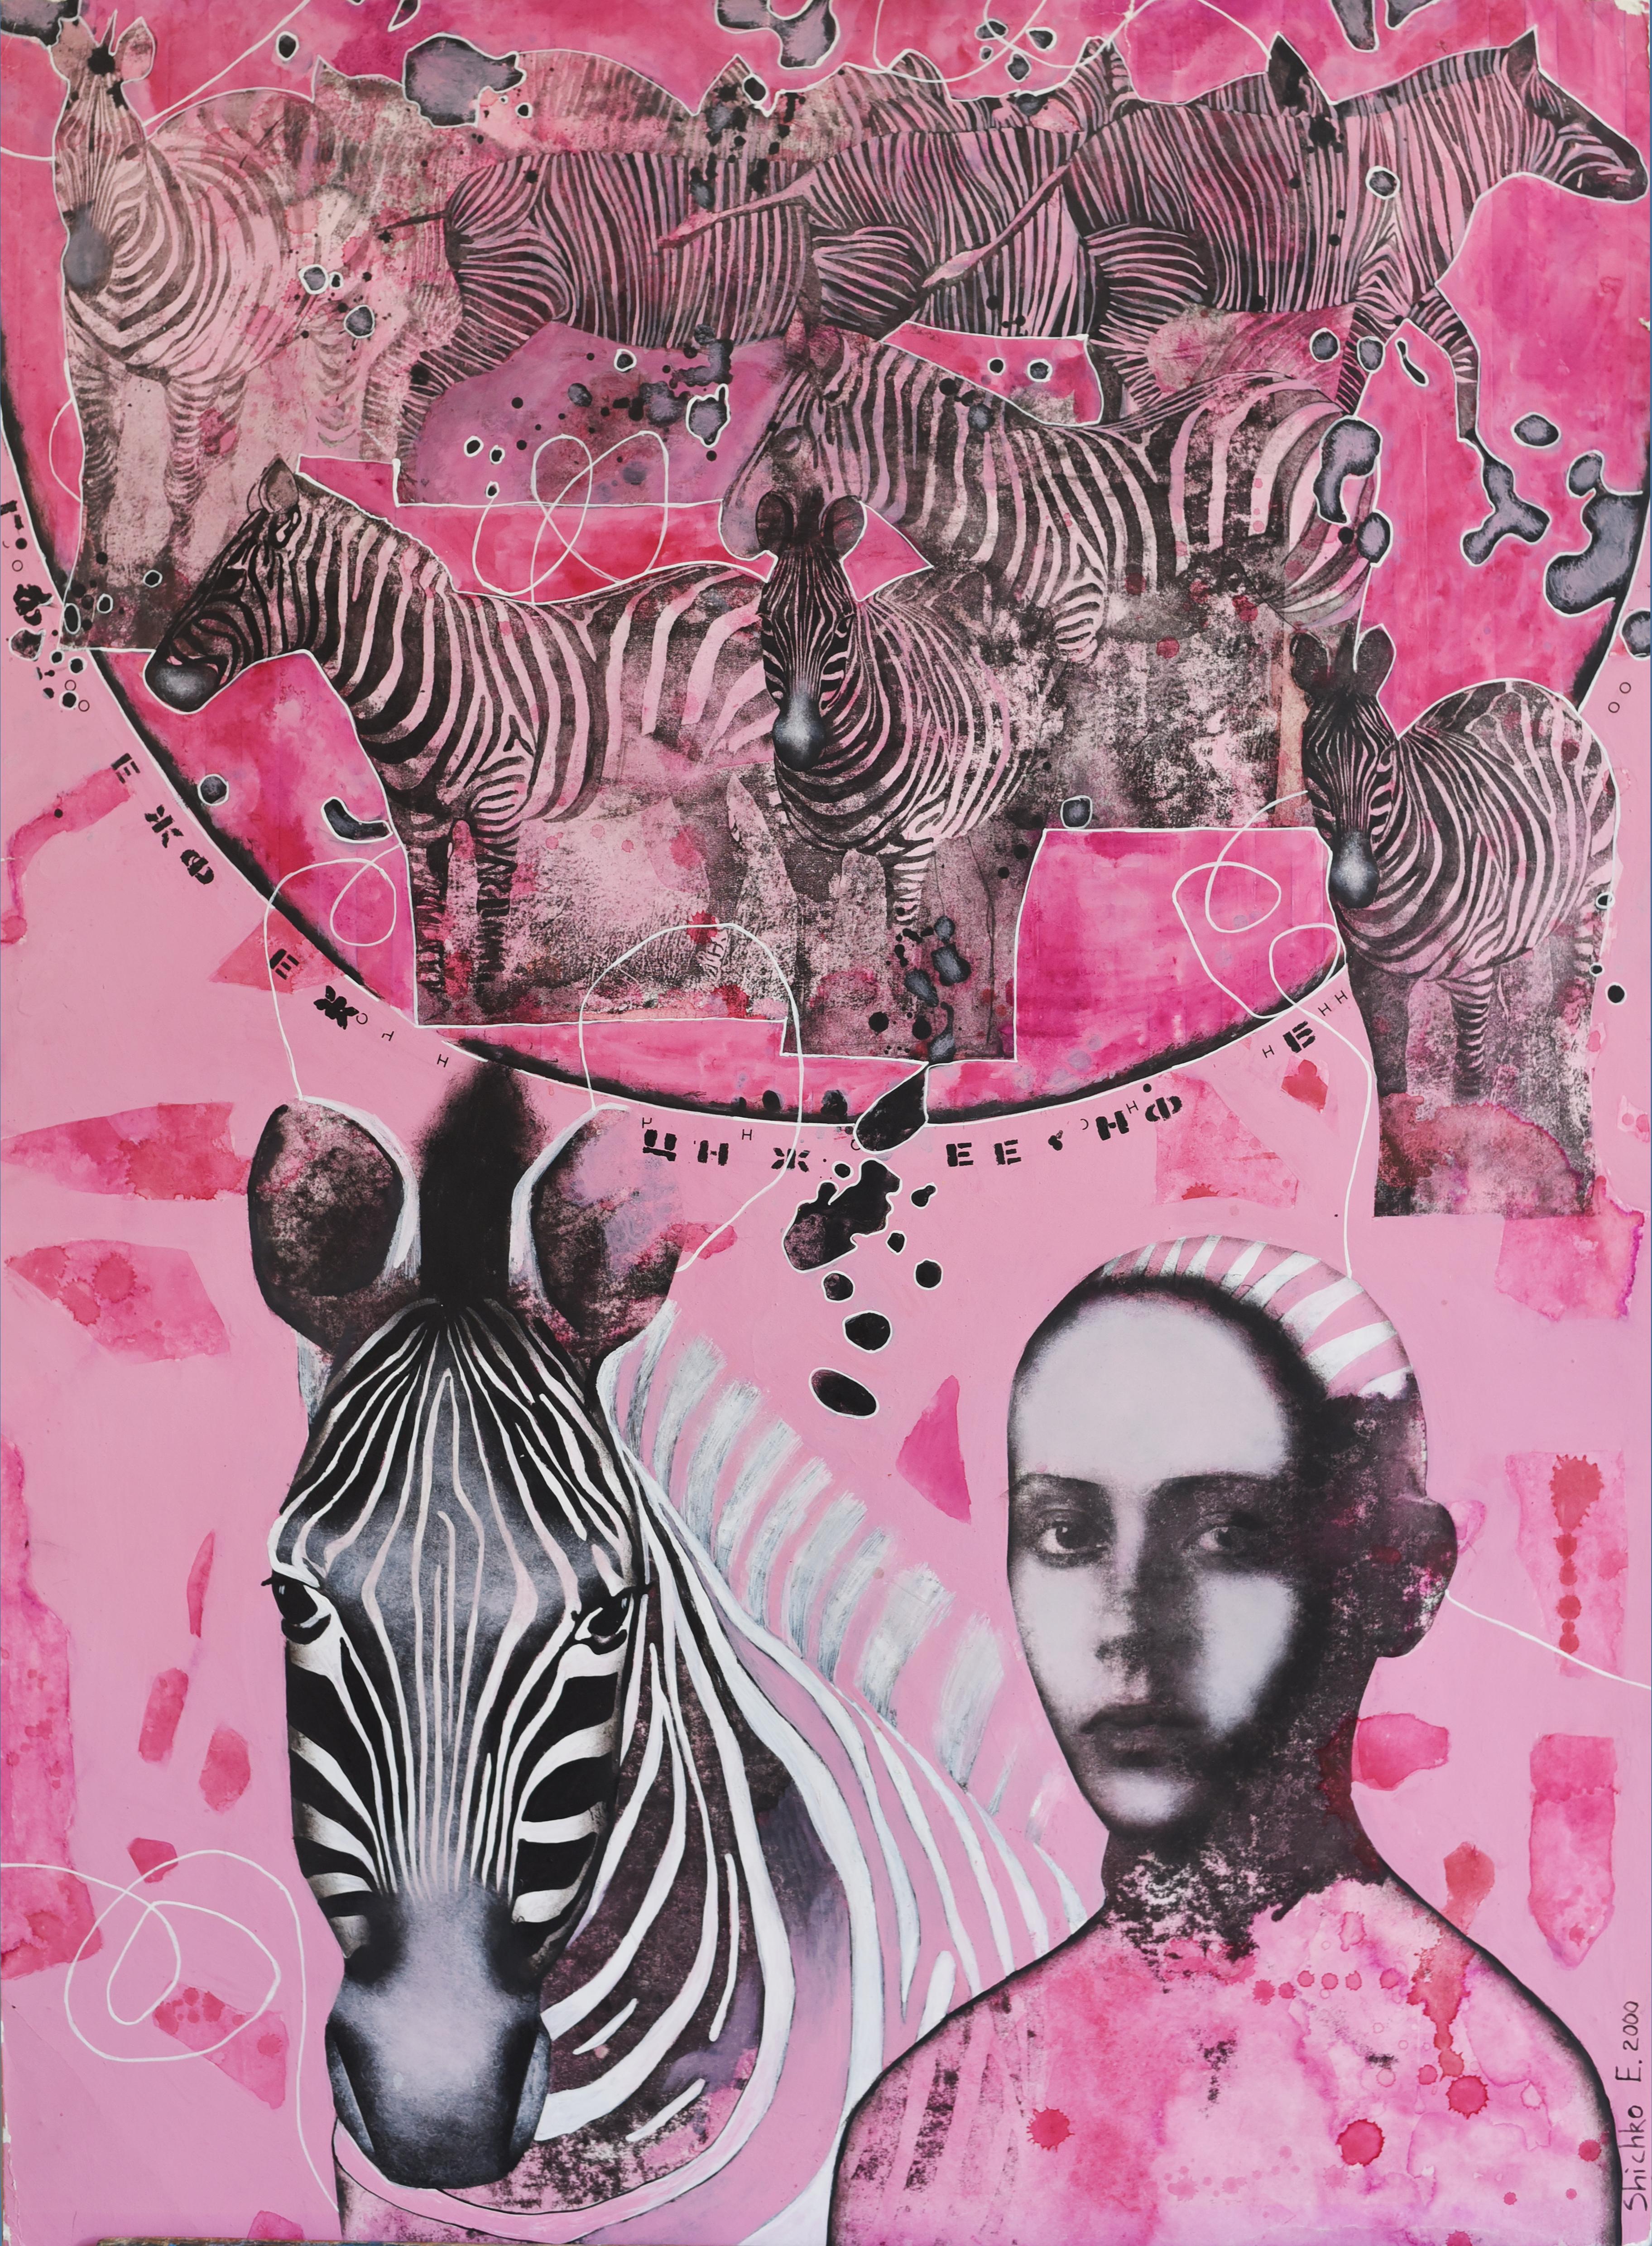 Elena Shichko Animal Painting - Friends, Portrait with Zebras, Original Elegant Painting Pink Colors on Paper